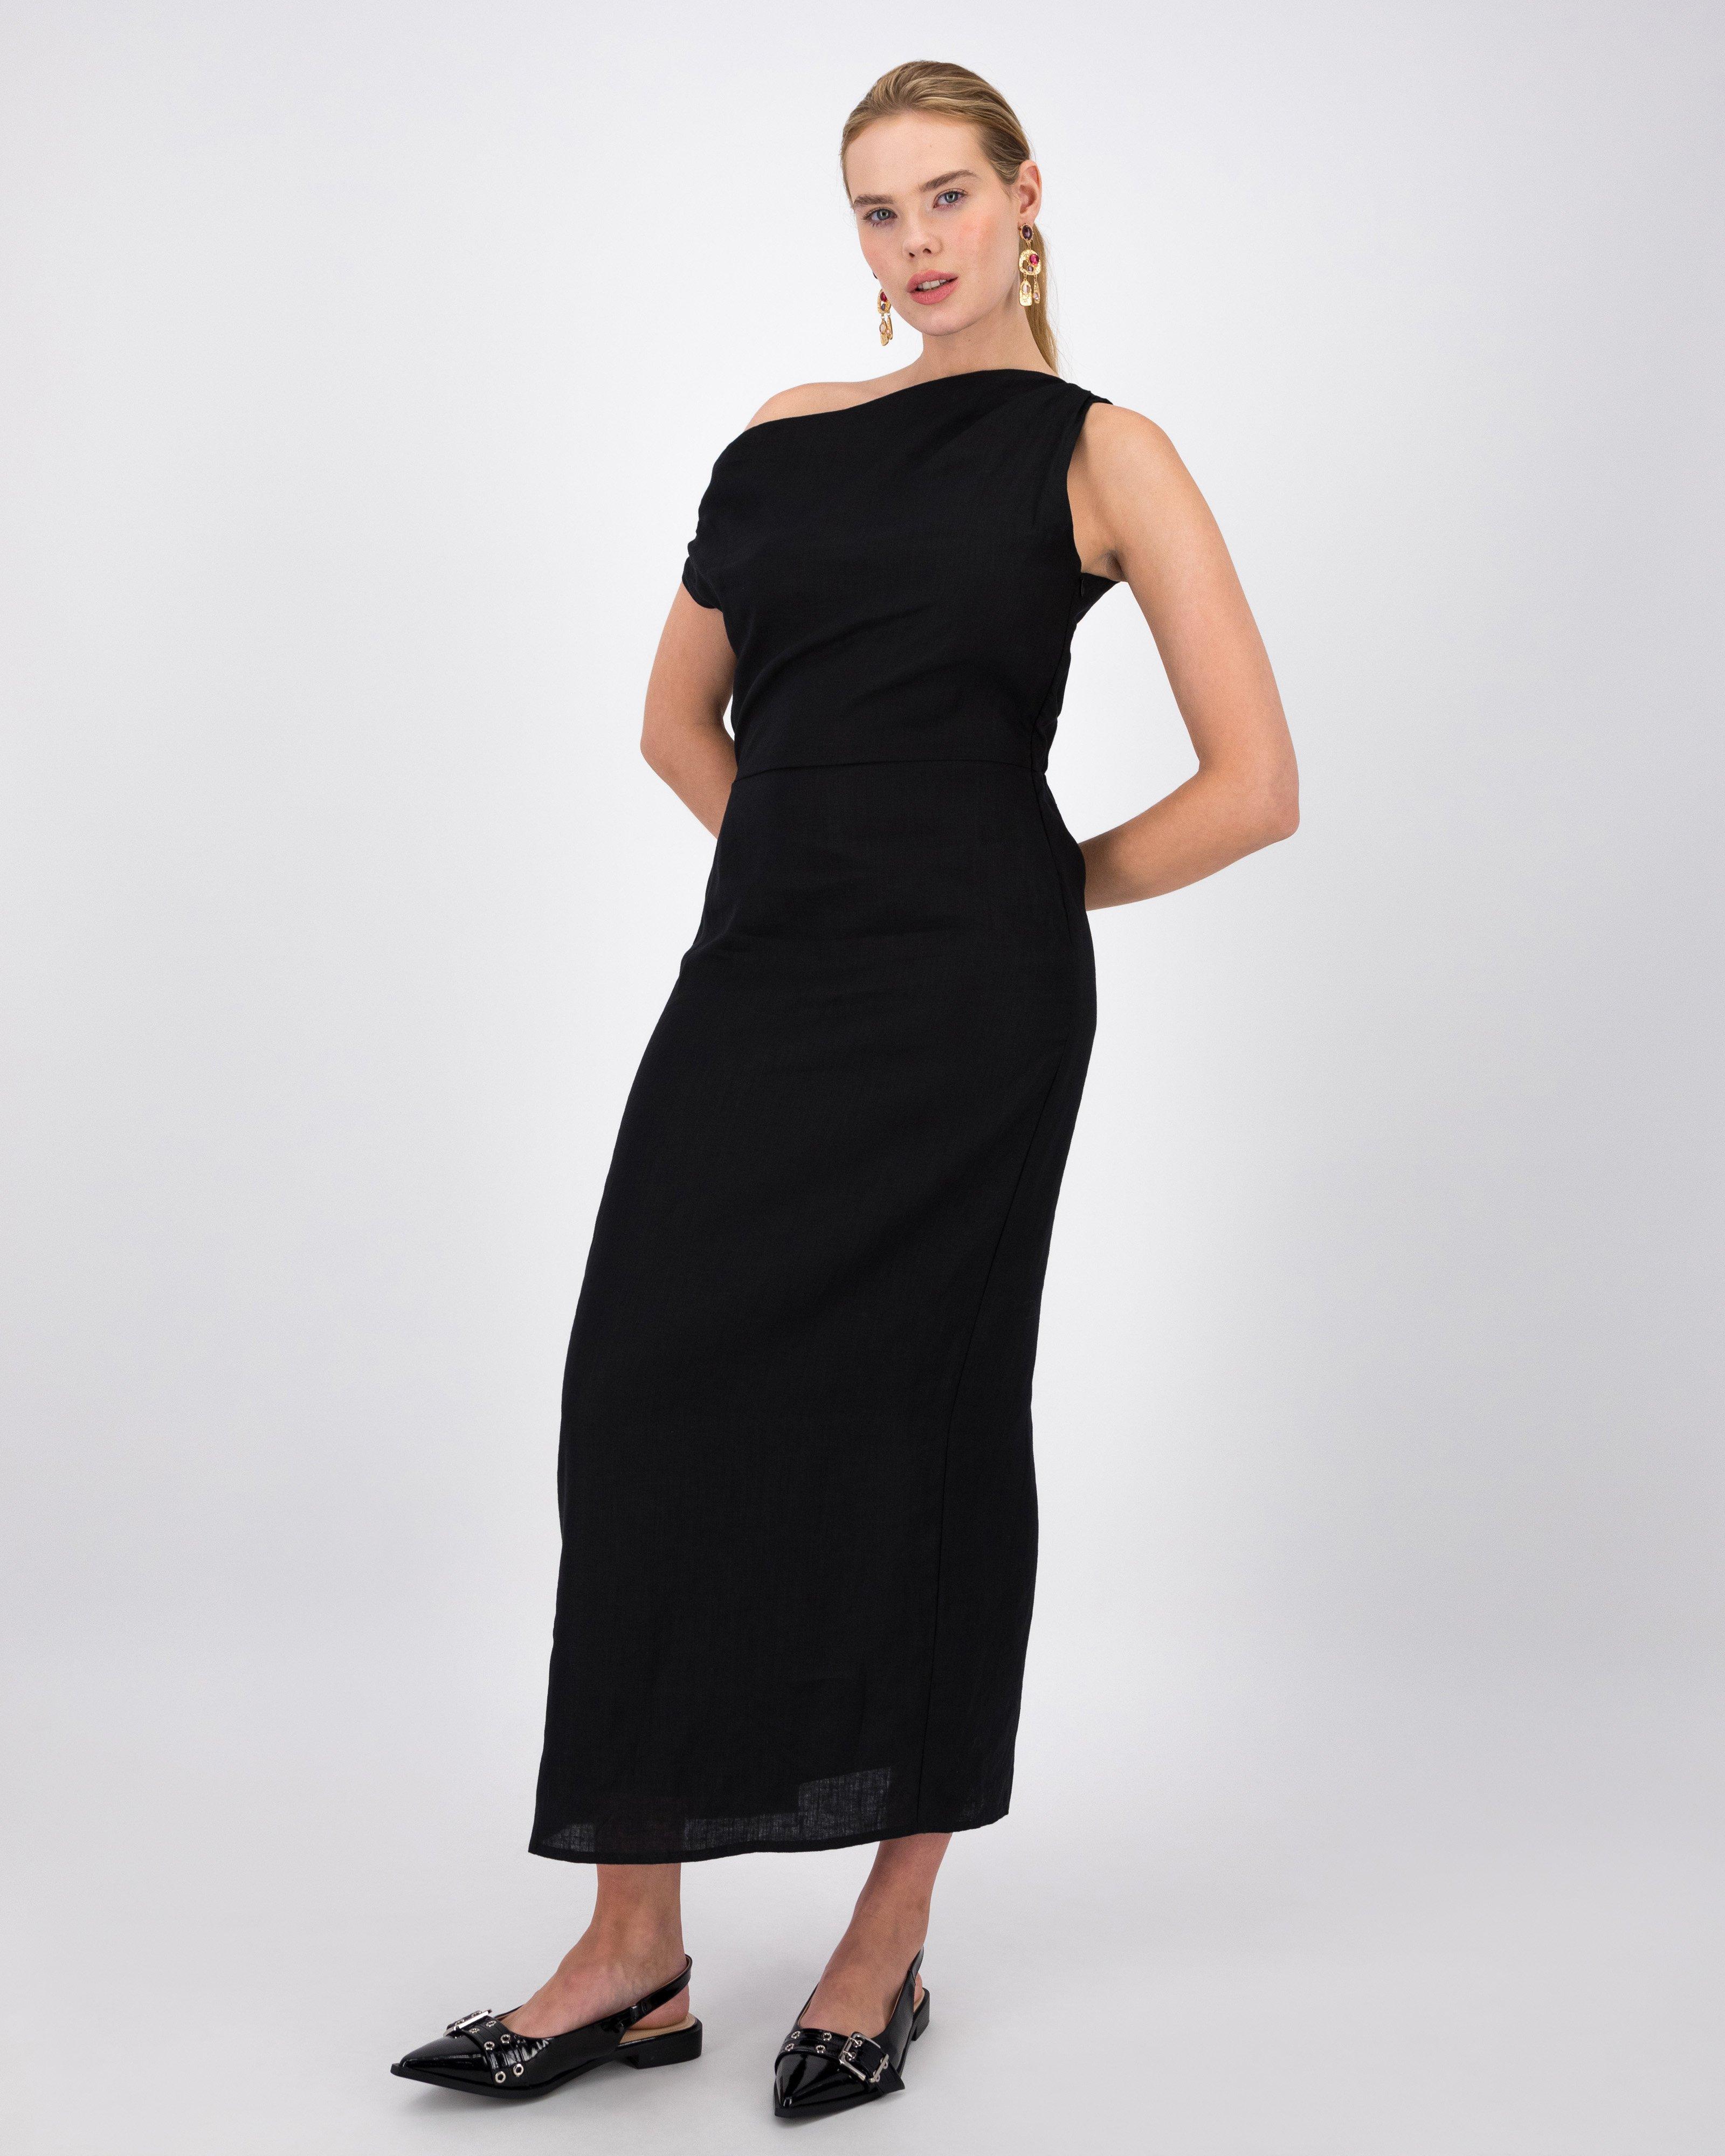 Emmylou Linen Dress -  Black